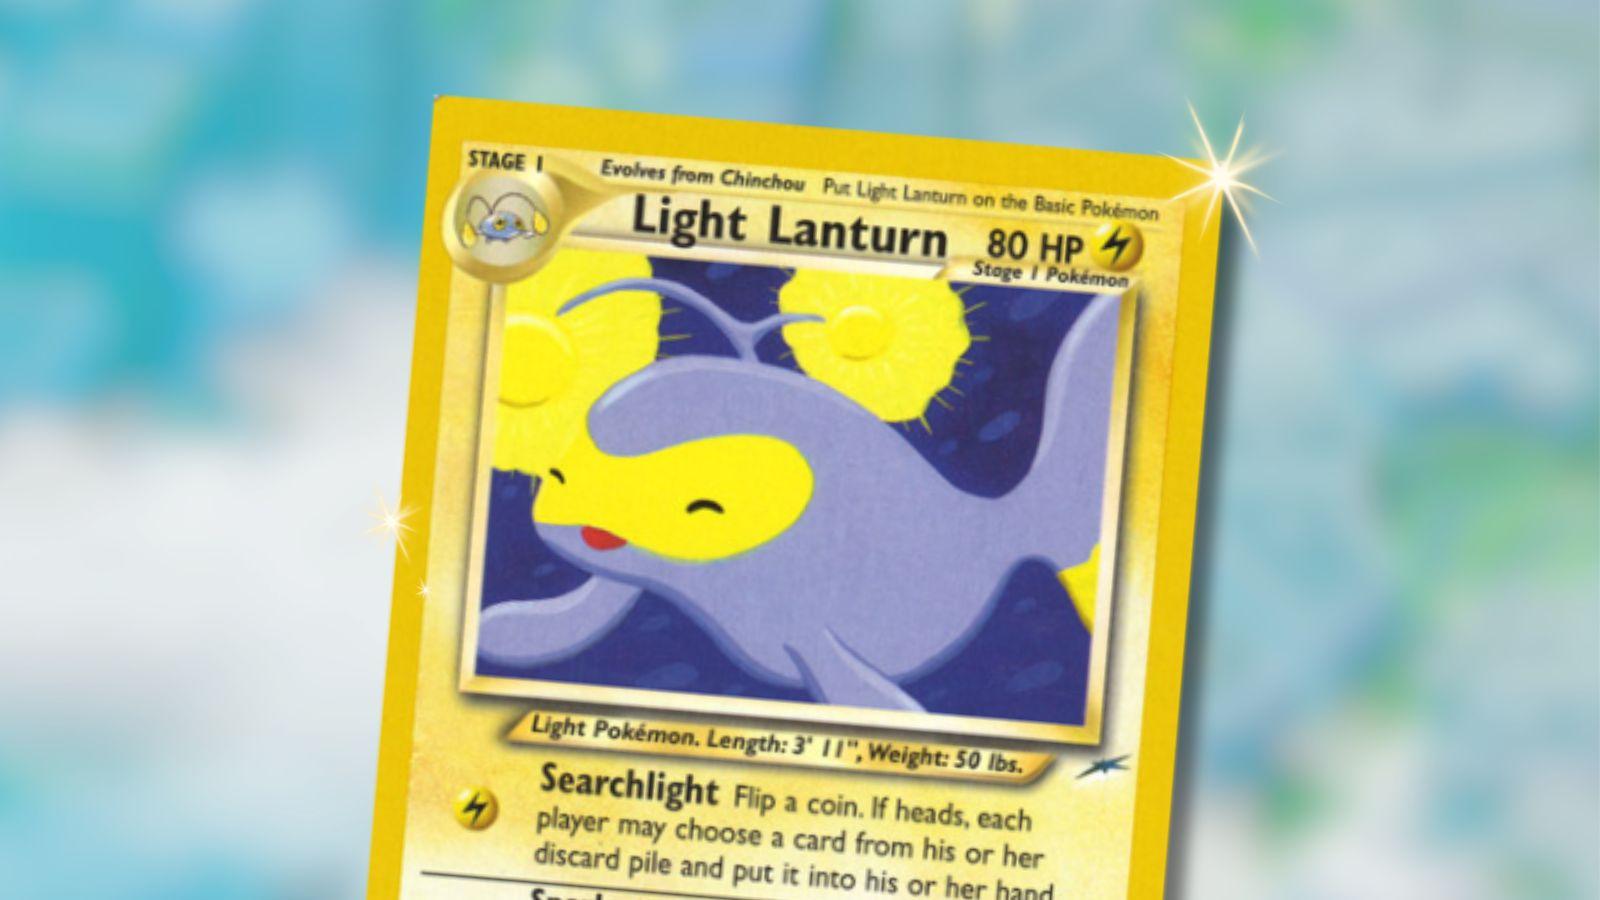 Light Lanturn Pokemon card with Lumiose City background.